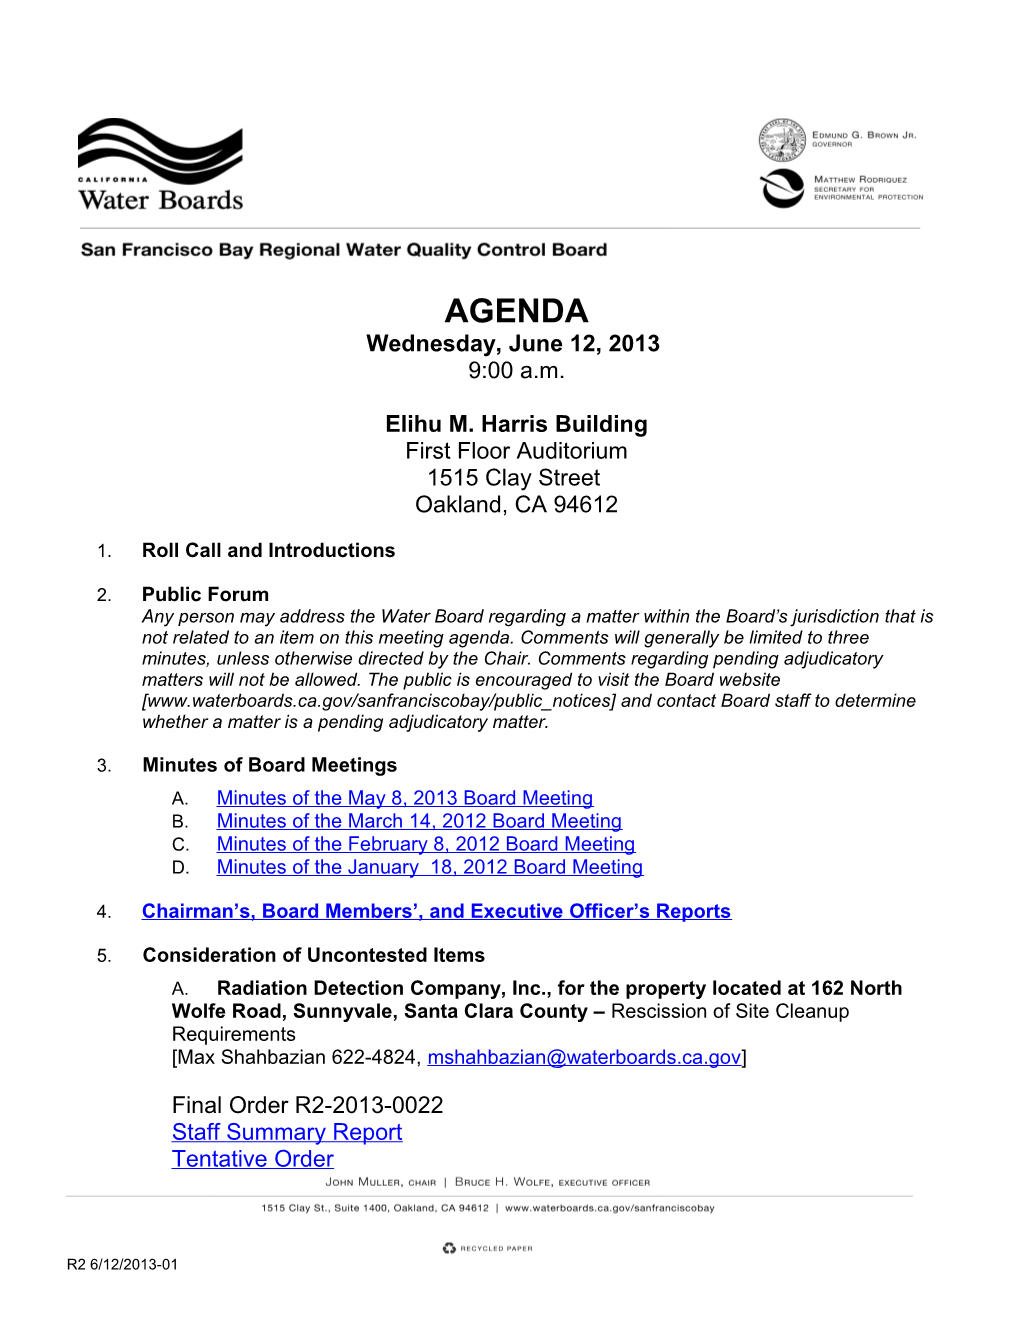 Water Board Meeting Agenda Page 2